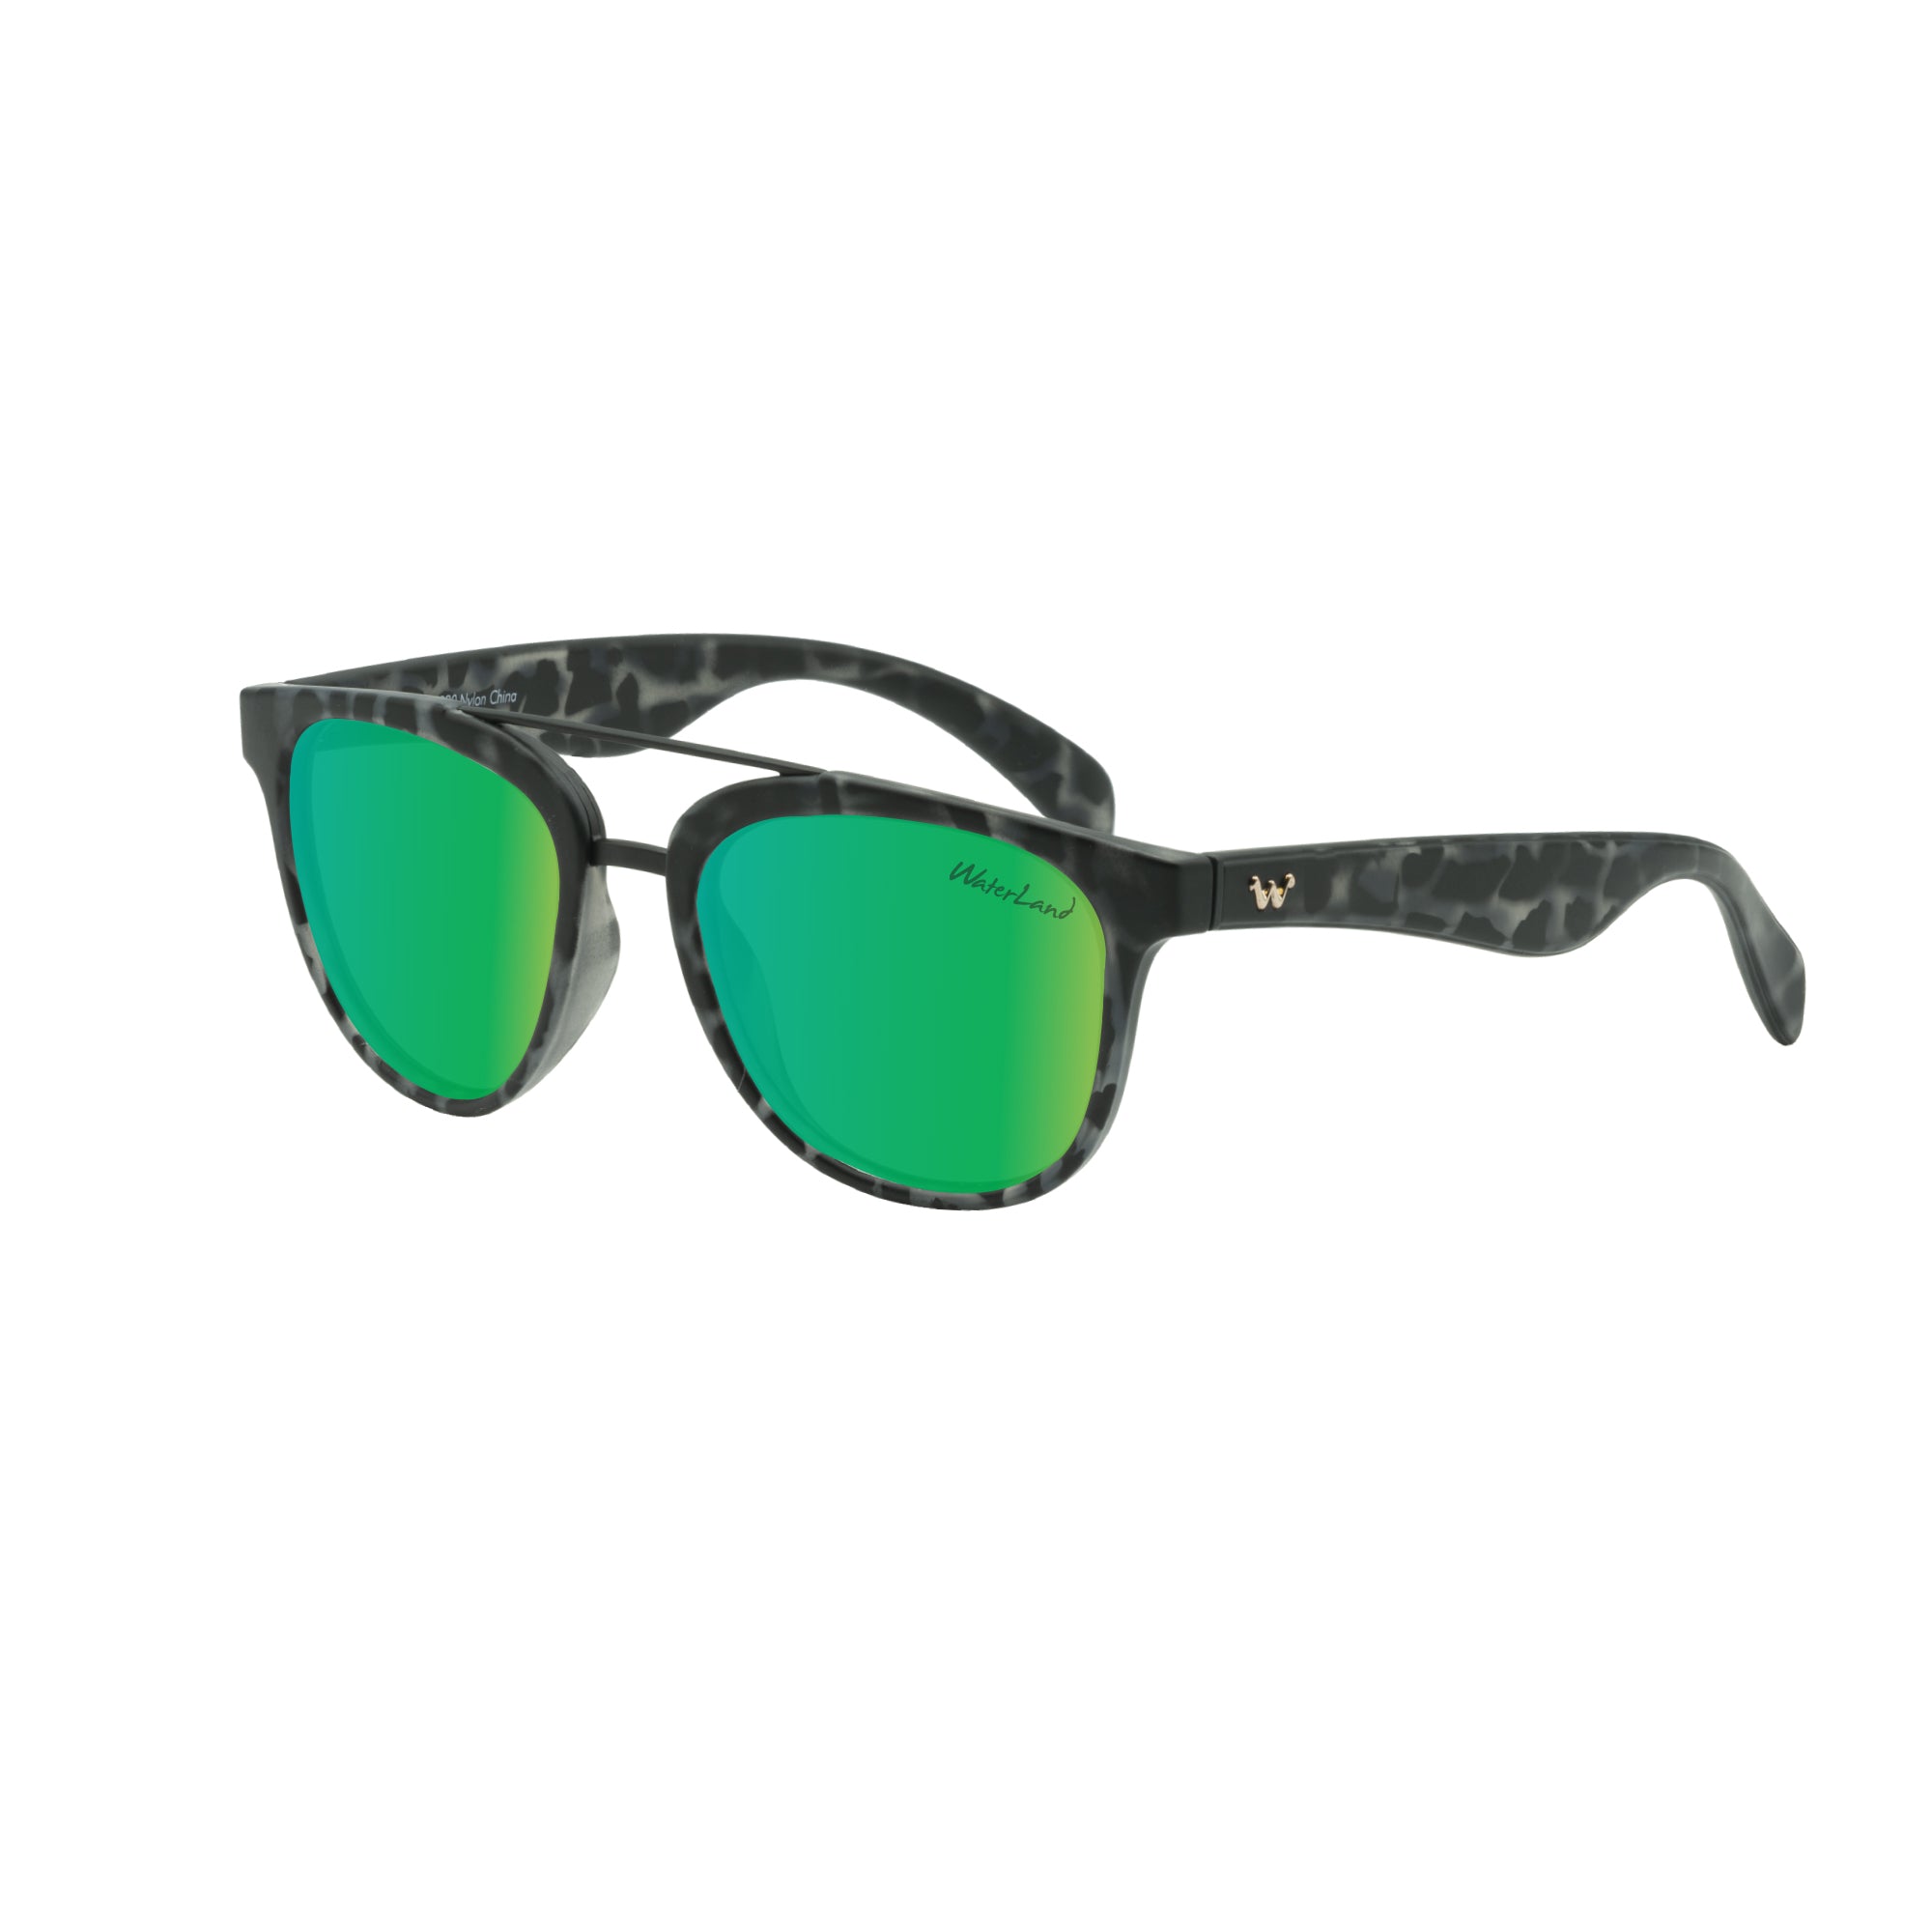 Waterland Hybro Sunglasses Black/Silver Mirror